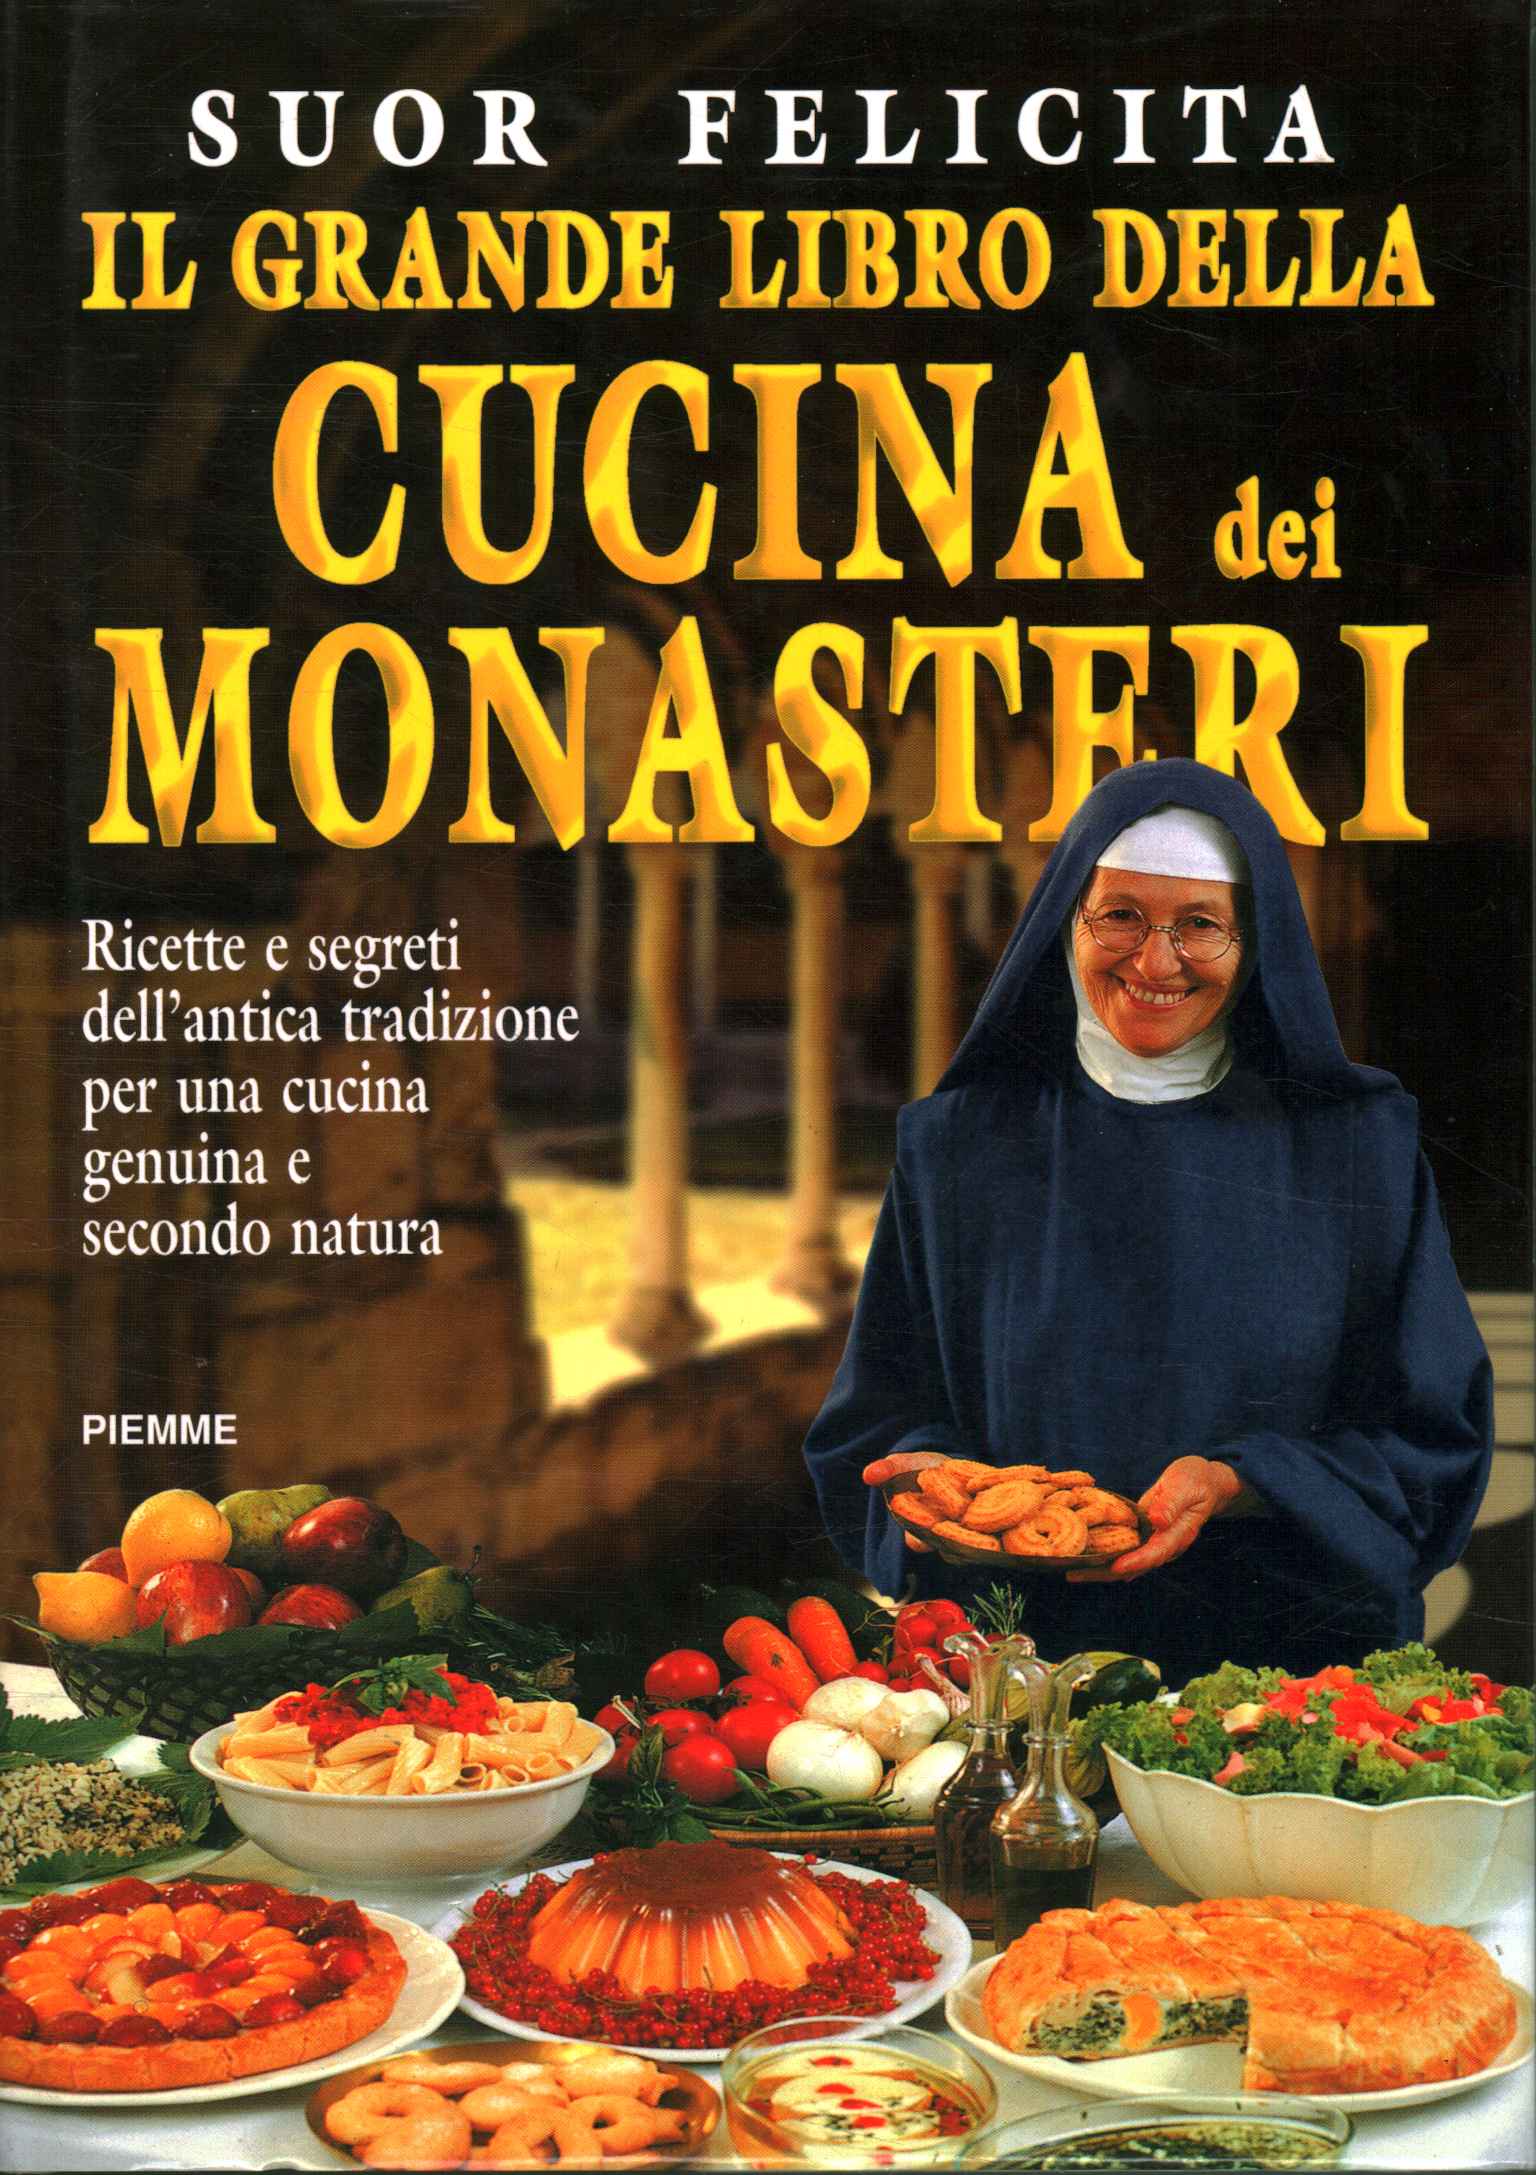 The great book of monastic cuisine